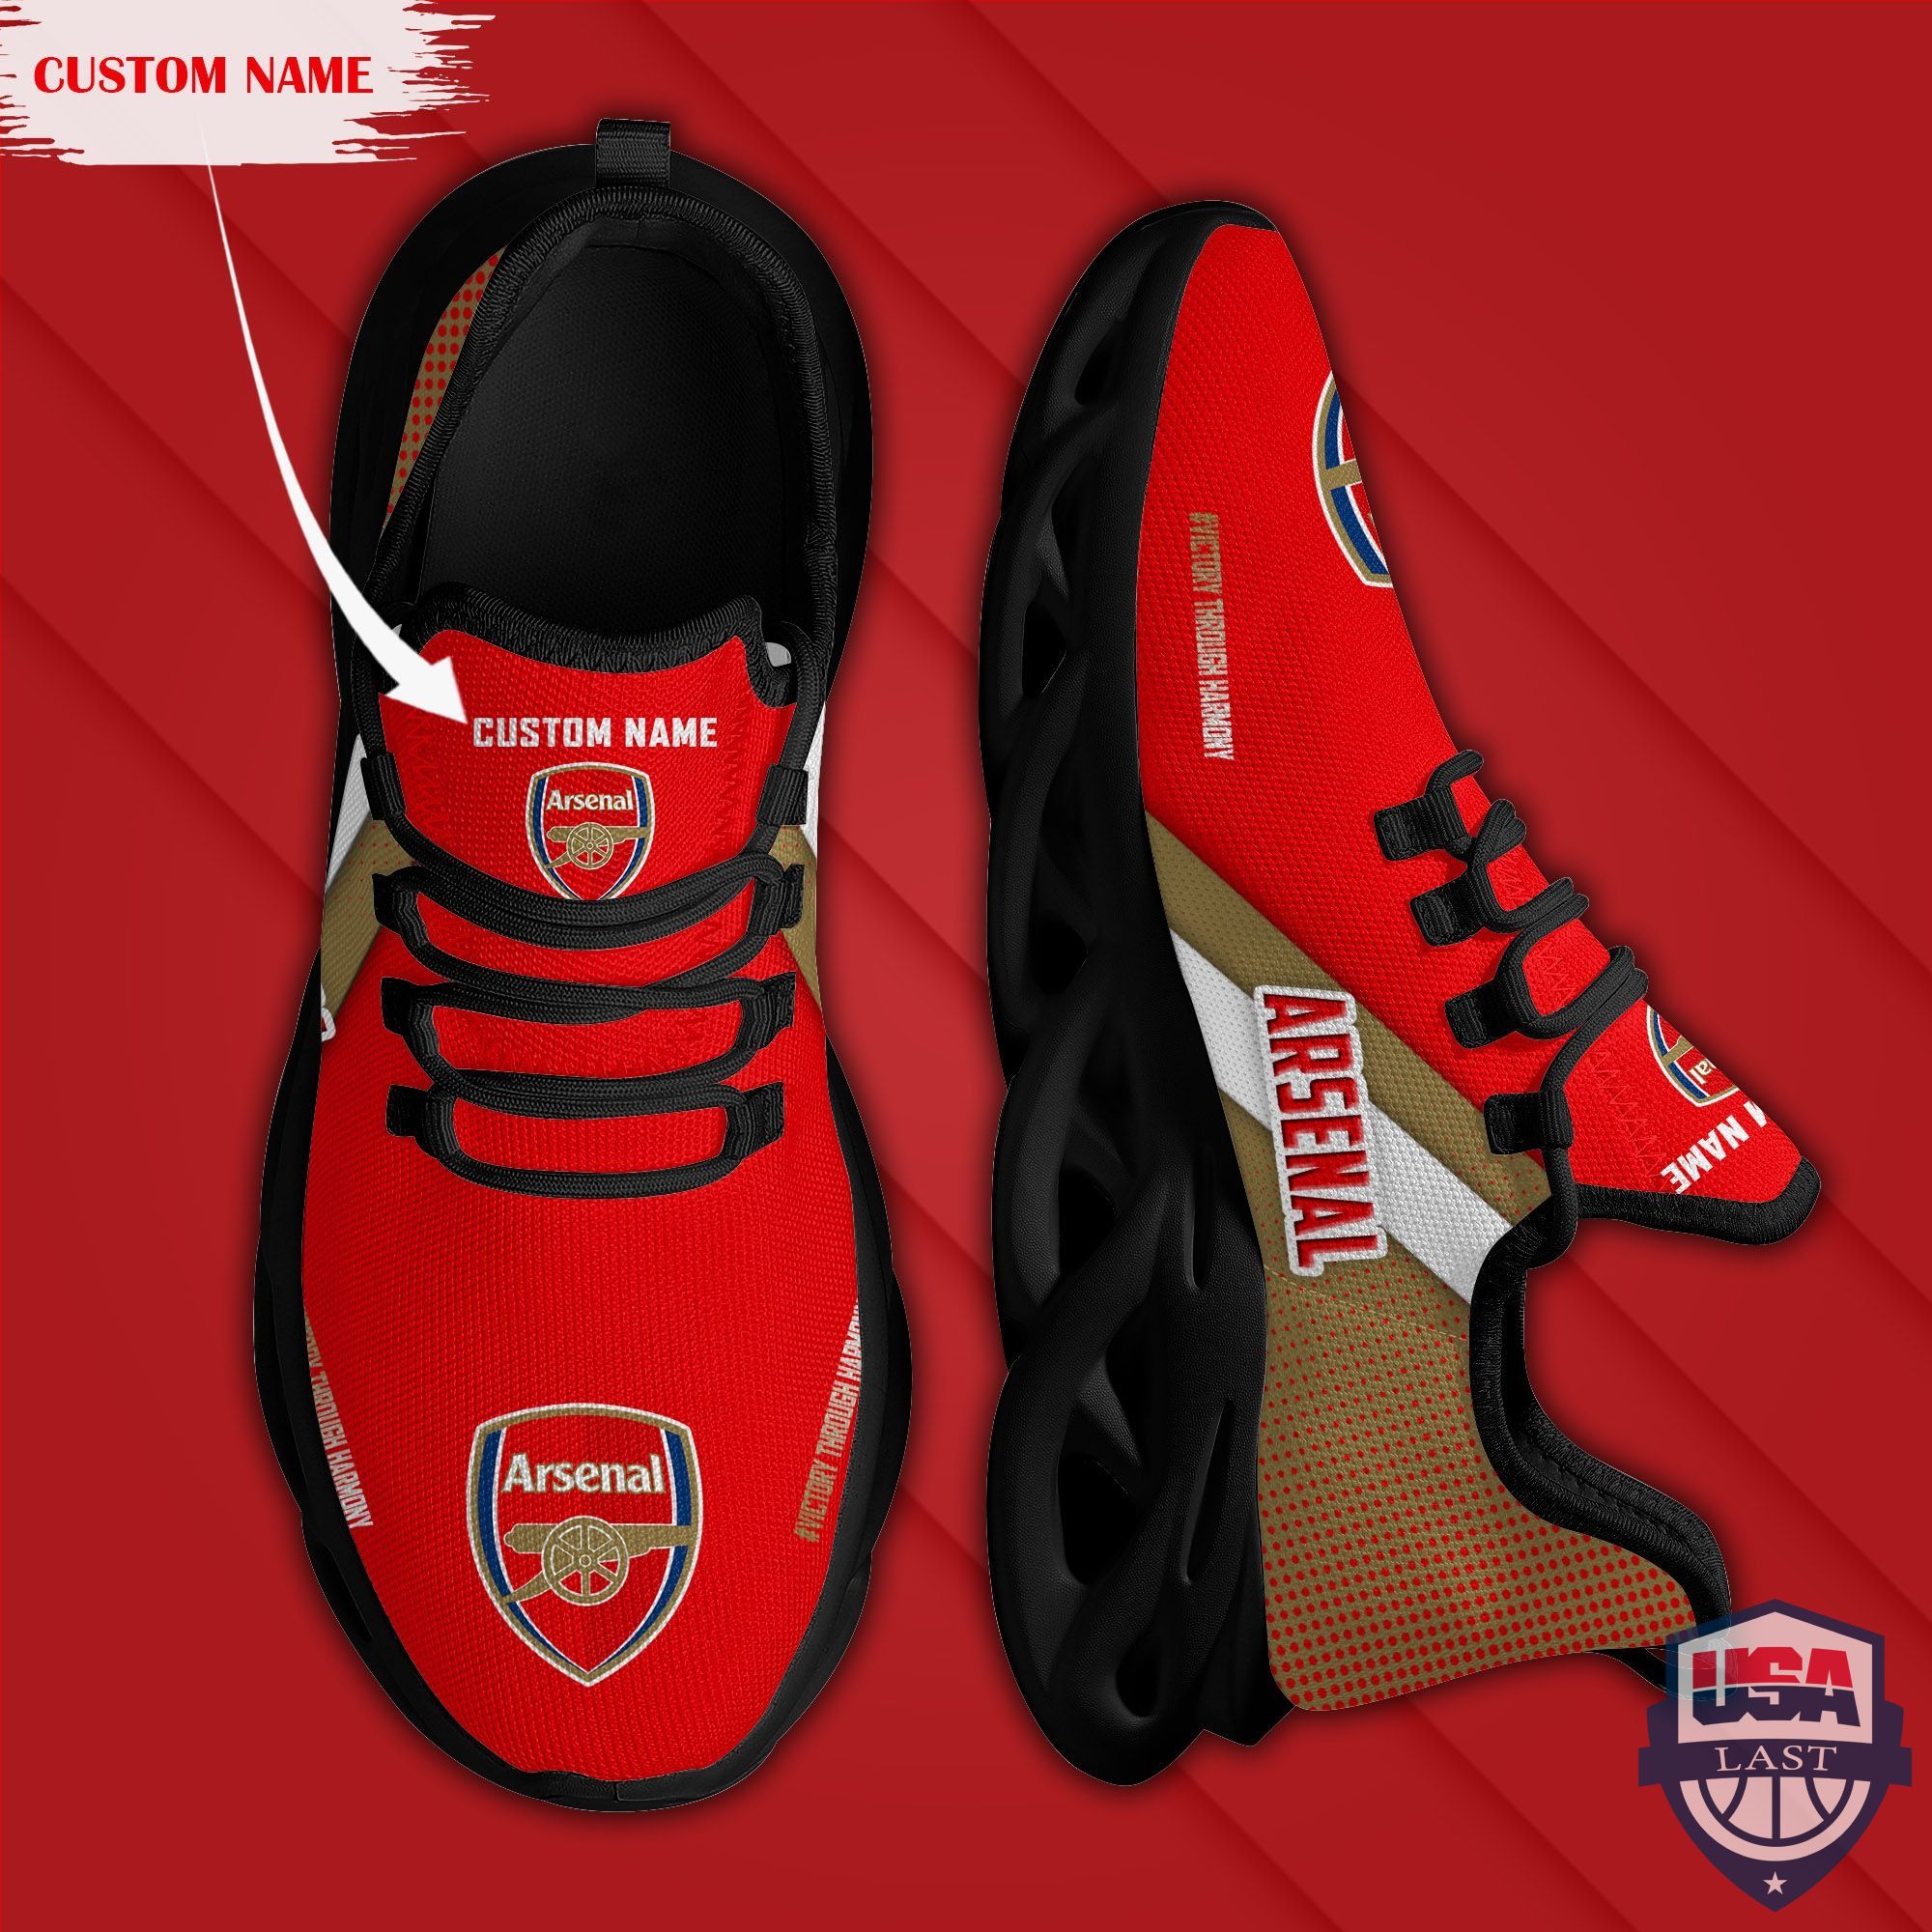 Arsenal Custom Name Max Soul Shoes